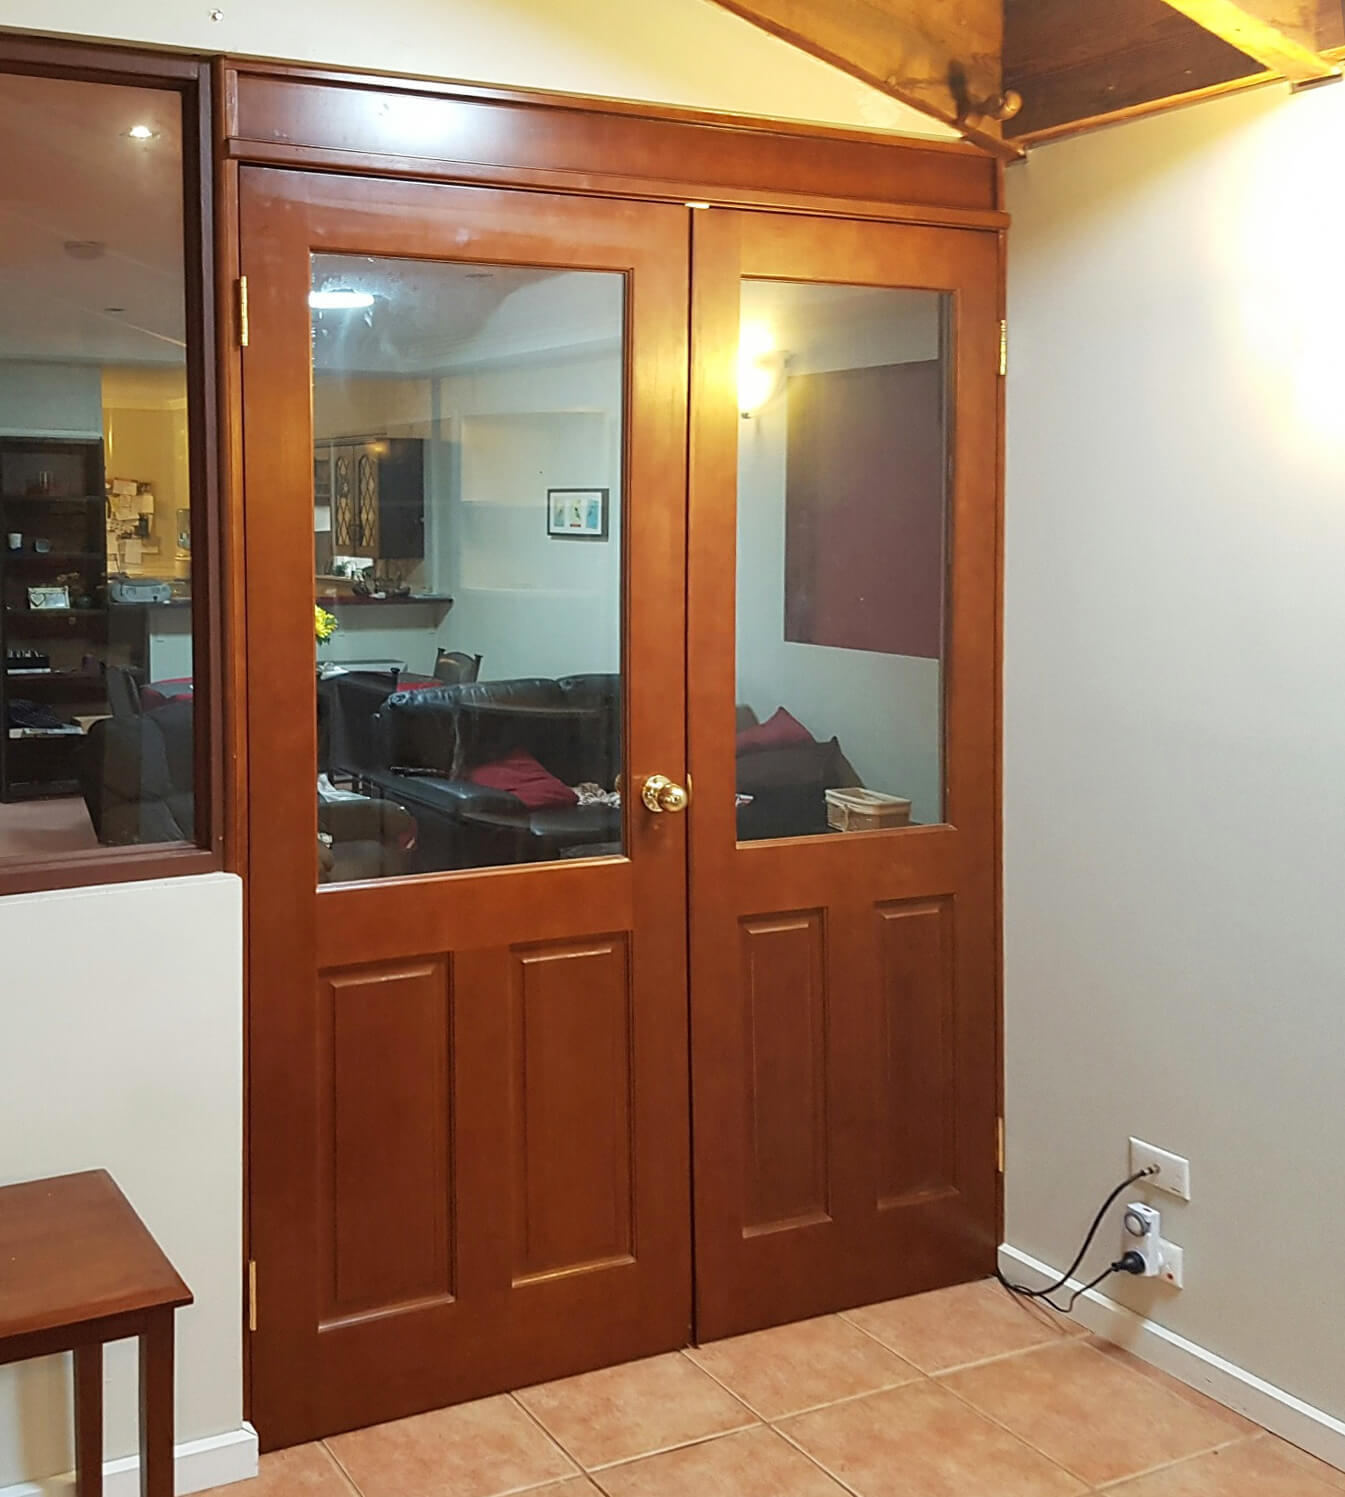 Doors Plus - Internal Doors Featuring Glass Panels - Finished in Dark Maple